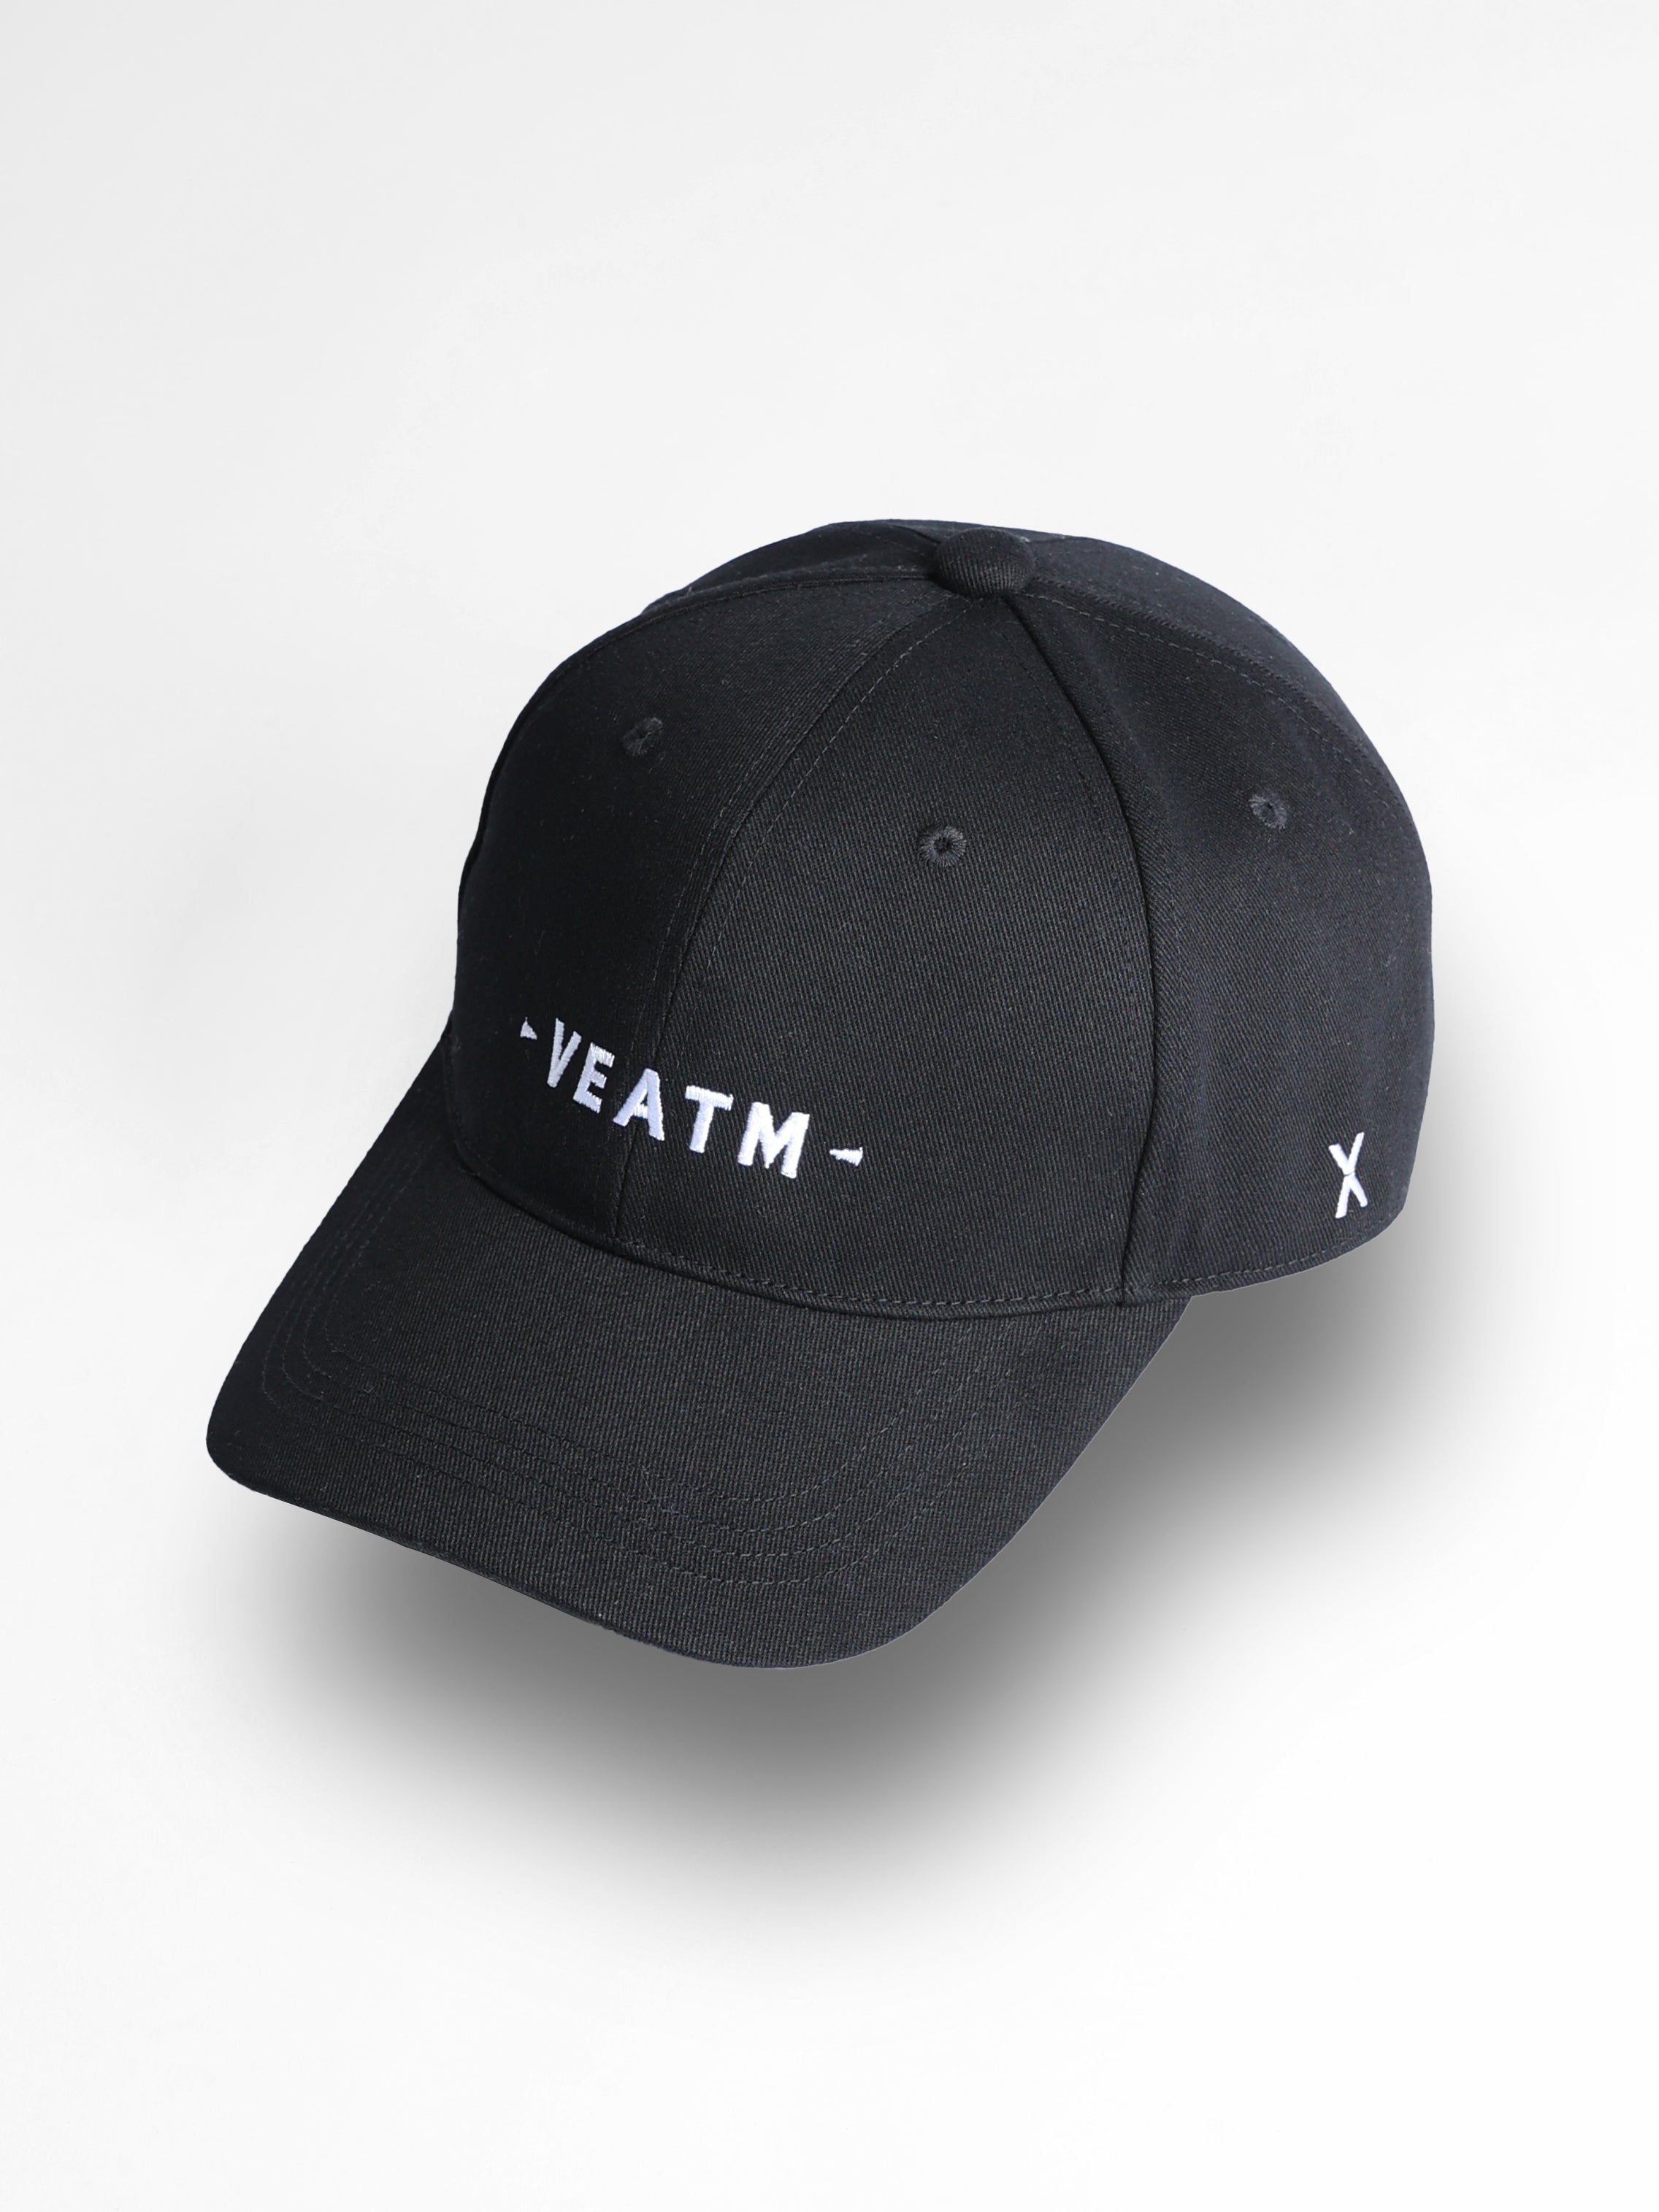 VEATM LOGO CAP【BLACK】